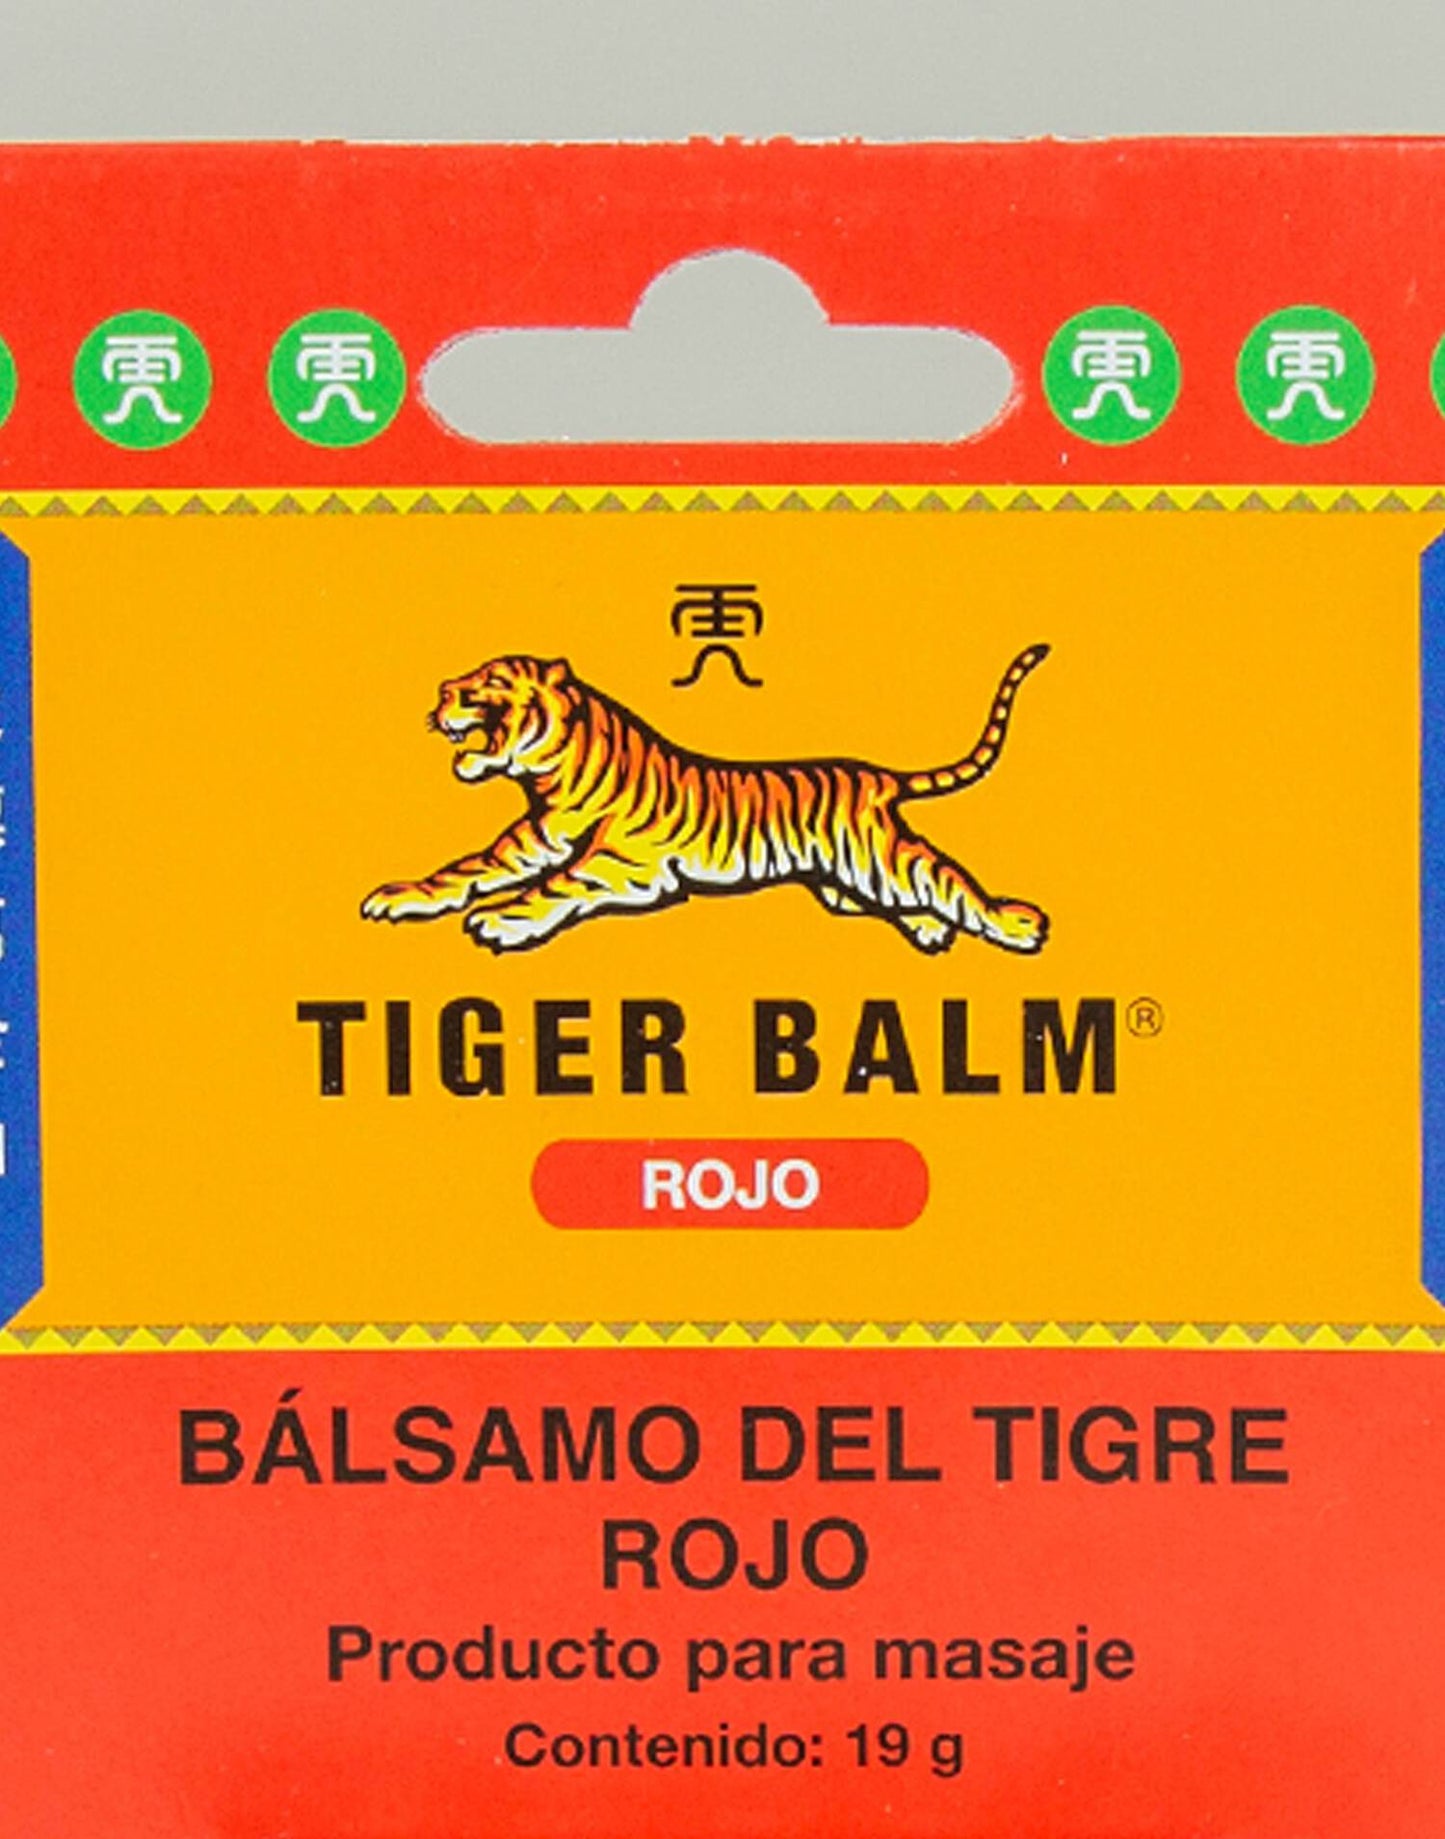 Red tiger balm